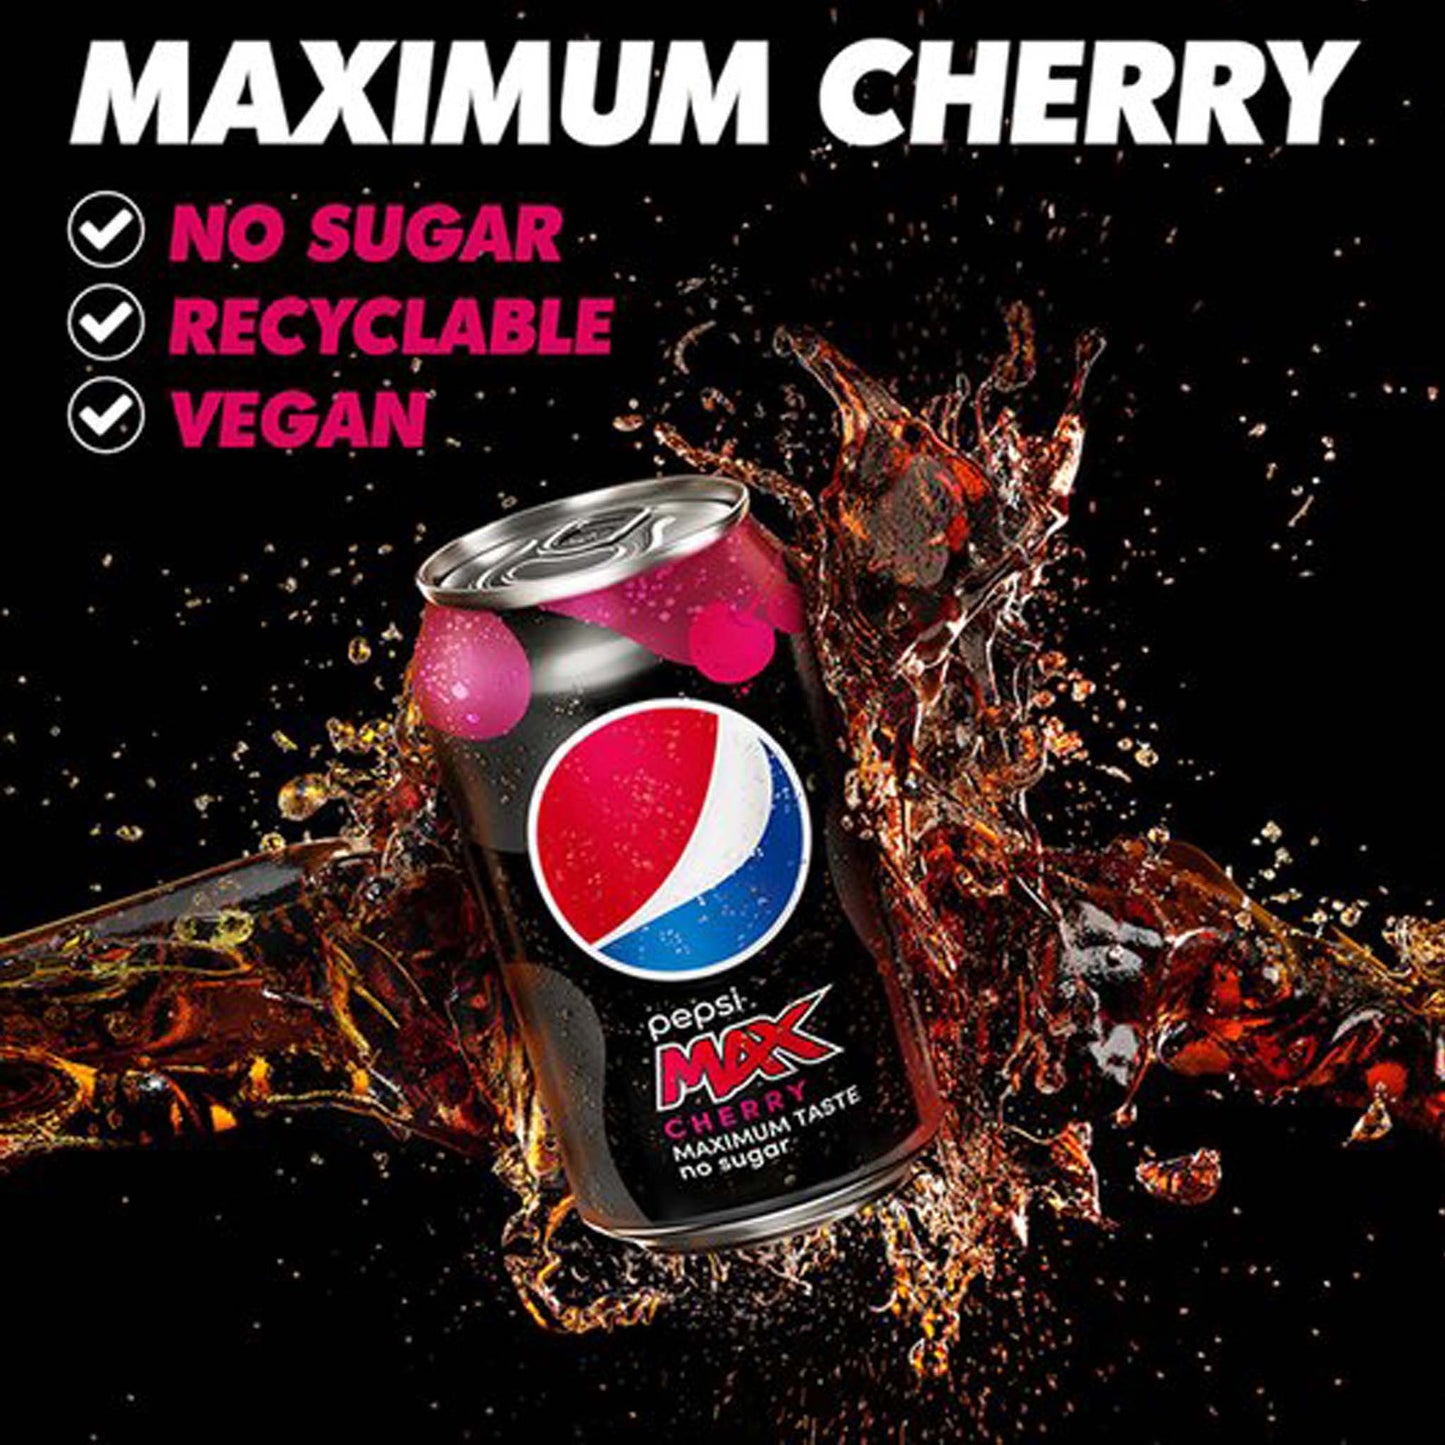 Pepsi Max Cherry Cans 24 X 330Ml